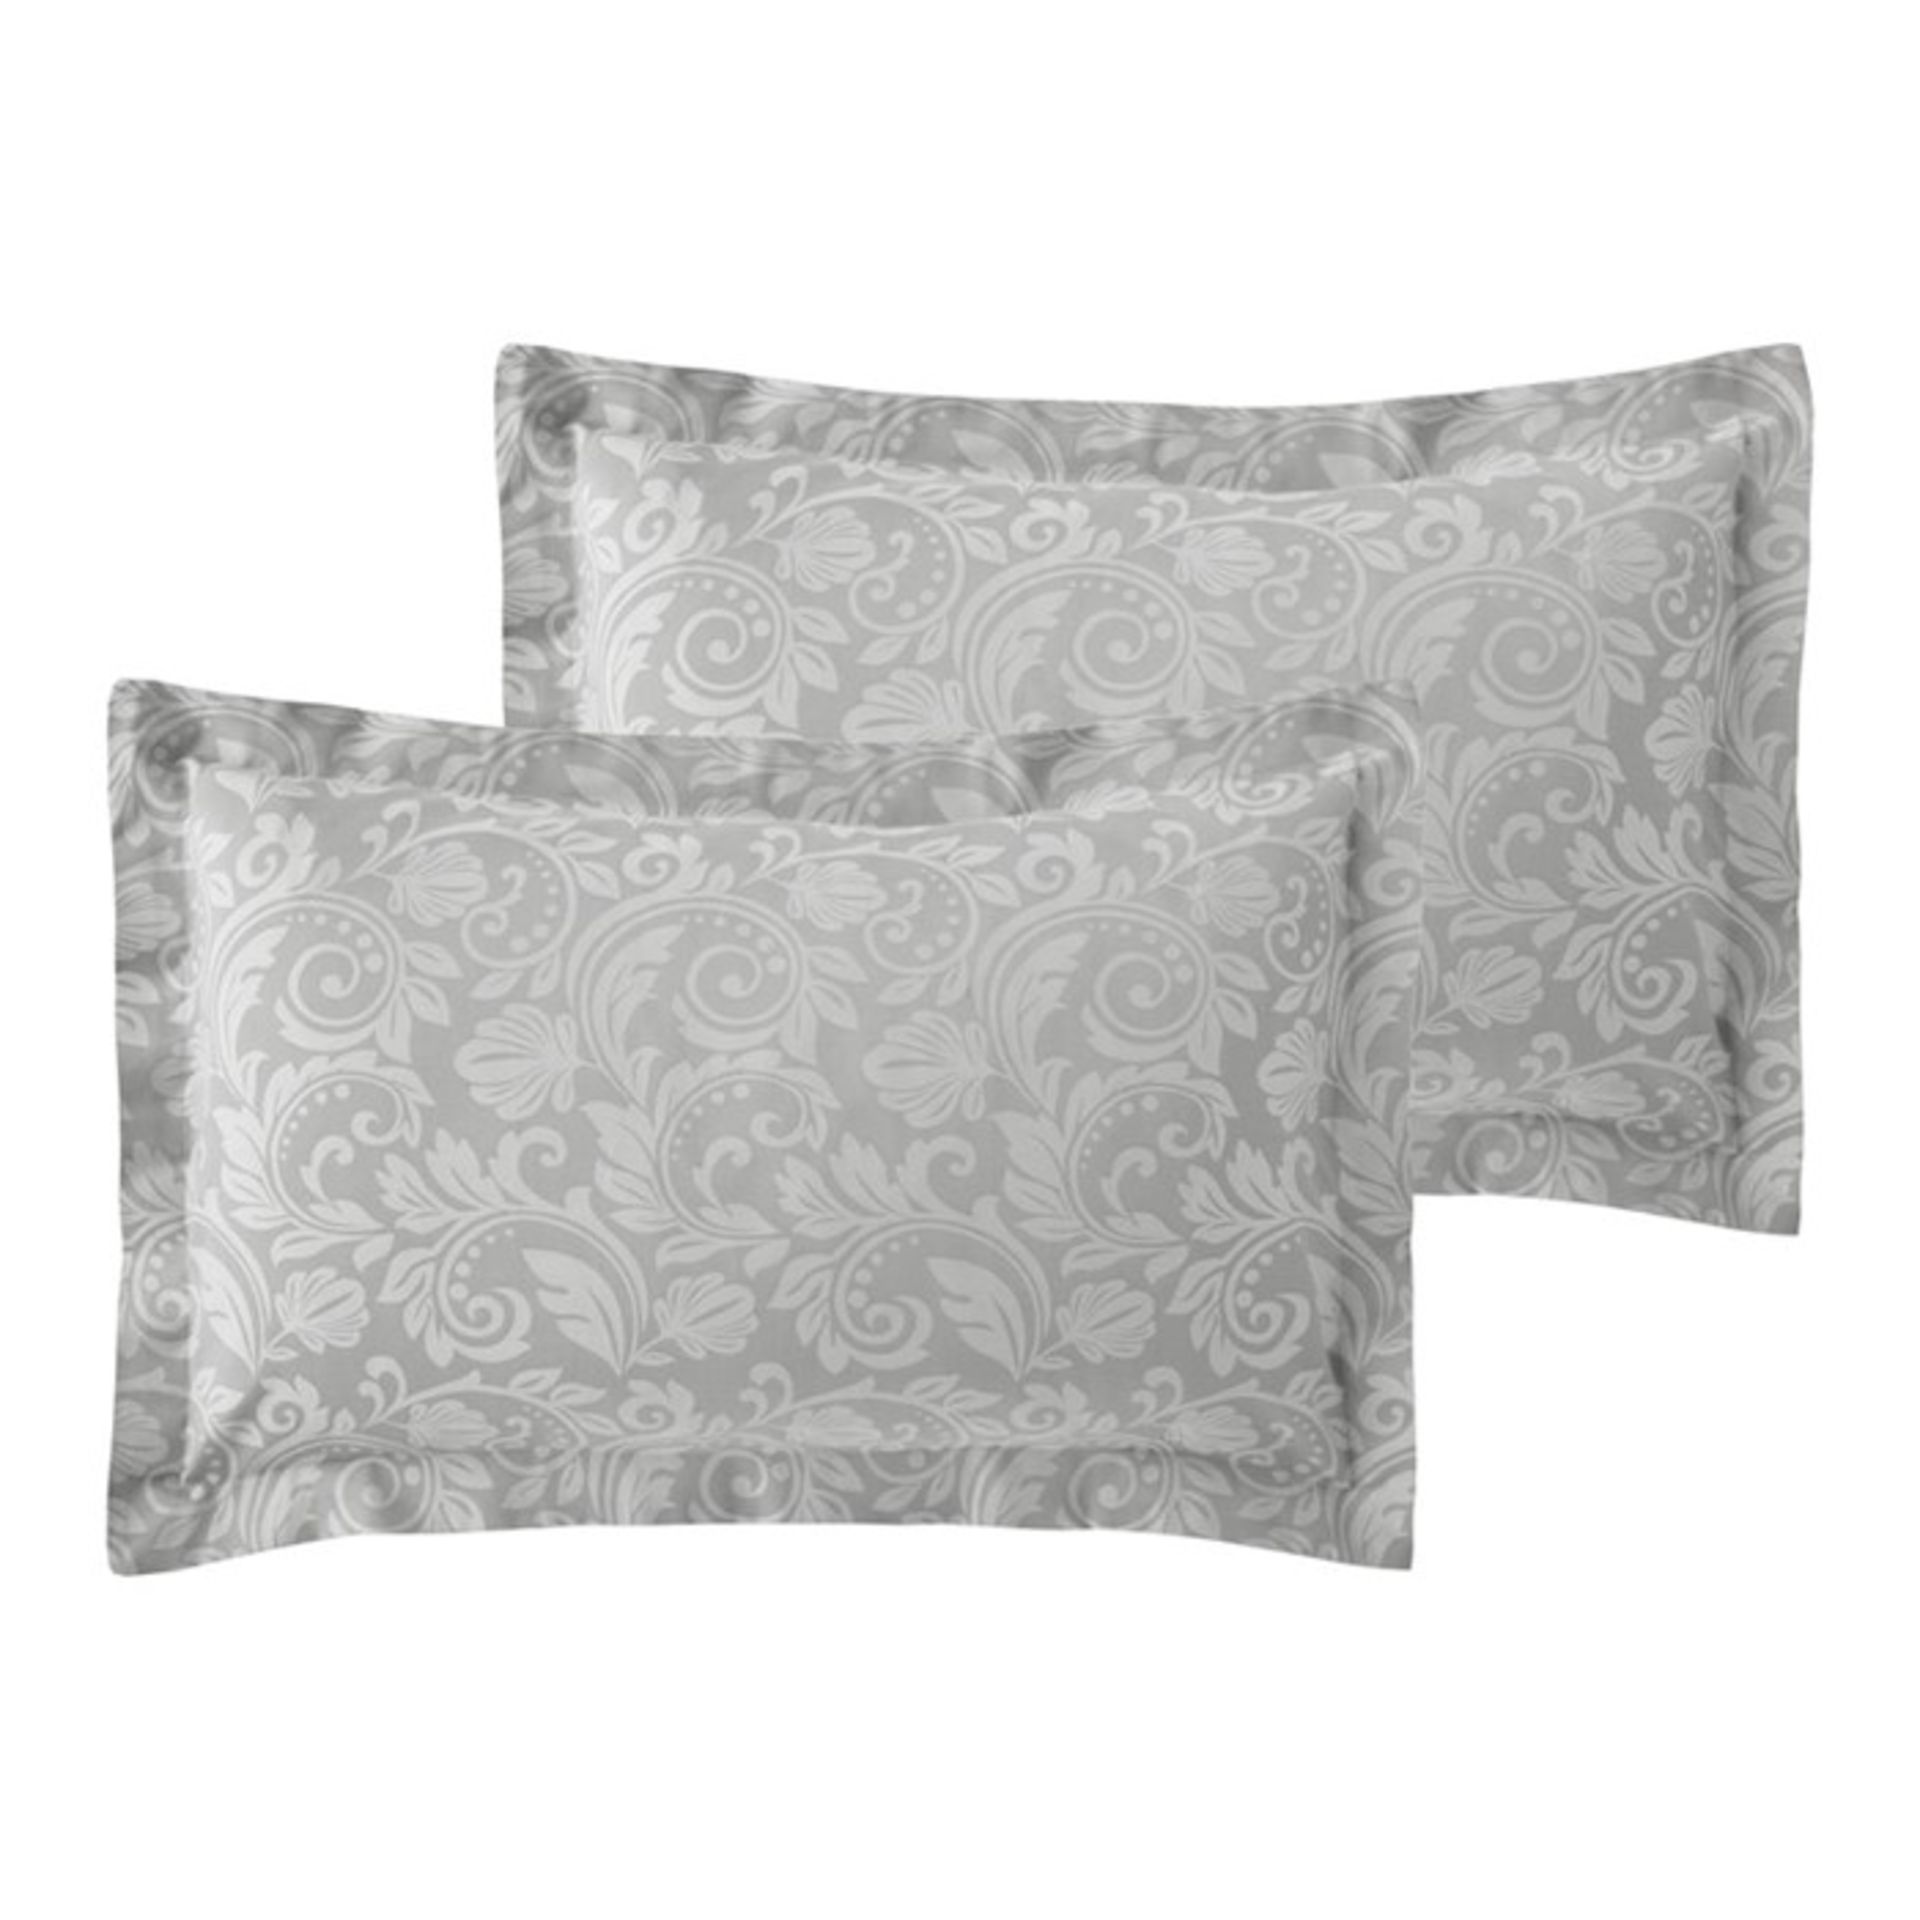 Rosalind Wheeler, Bastow Oxford Pillowcase Colour: Natural (PAIR) (HOKE0544.32064309 - HLS1 - S459)